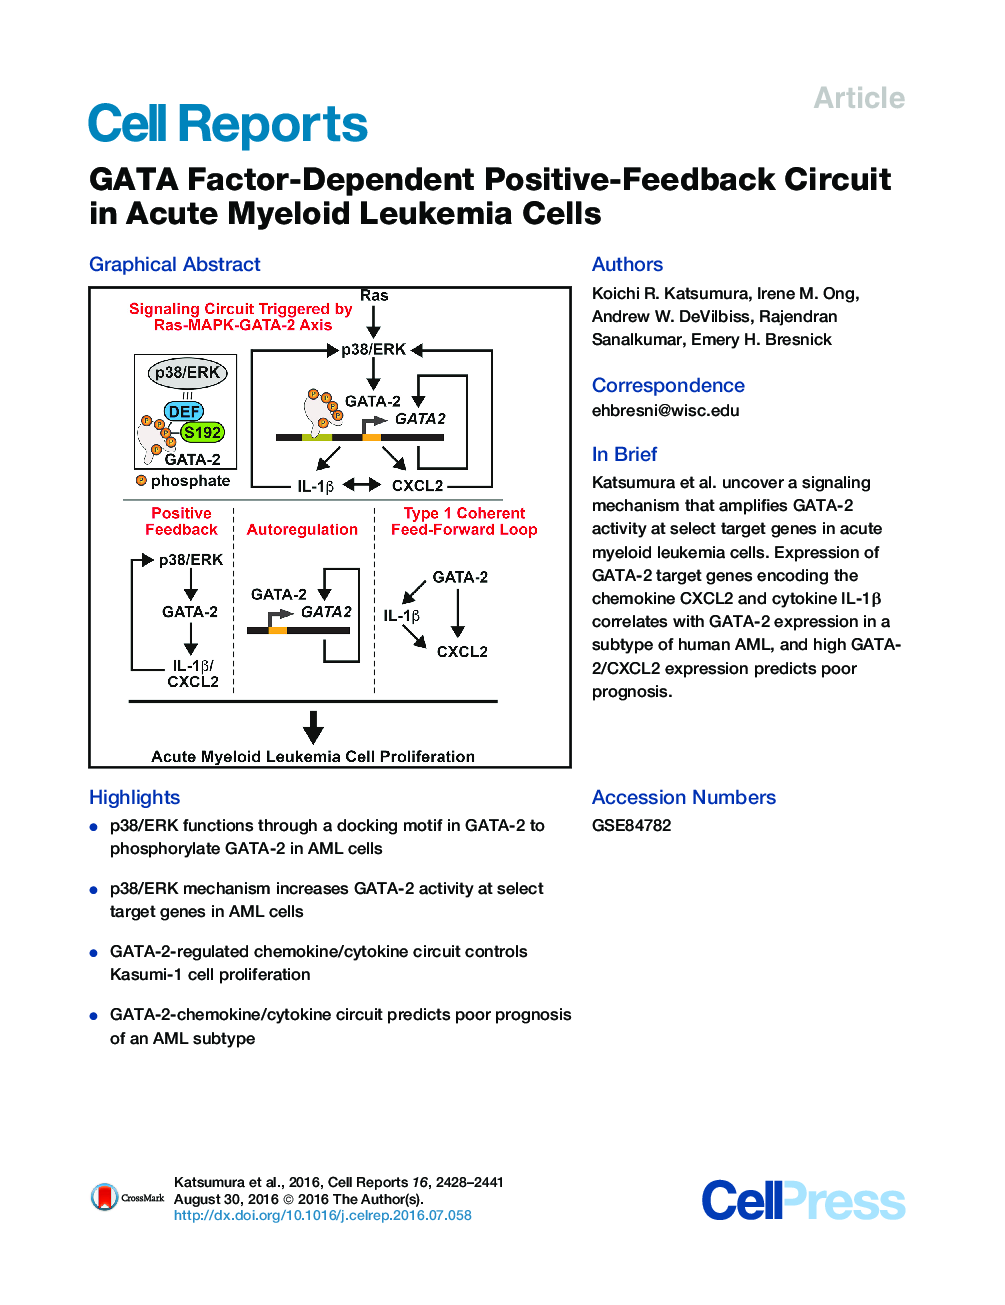 GATA Factor-Dependent Positive-Feedback Circuit in Acute Myeloid Leukemia Cells